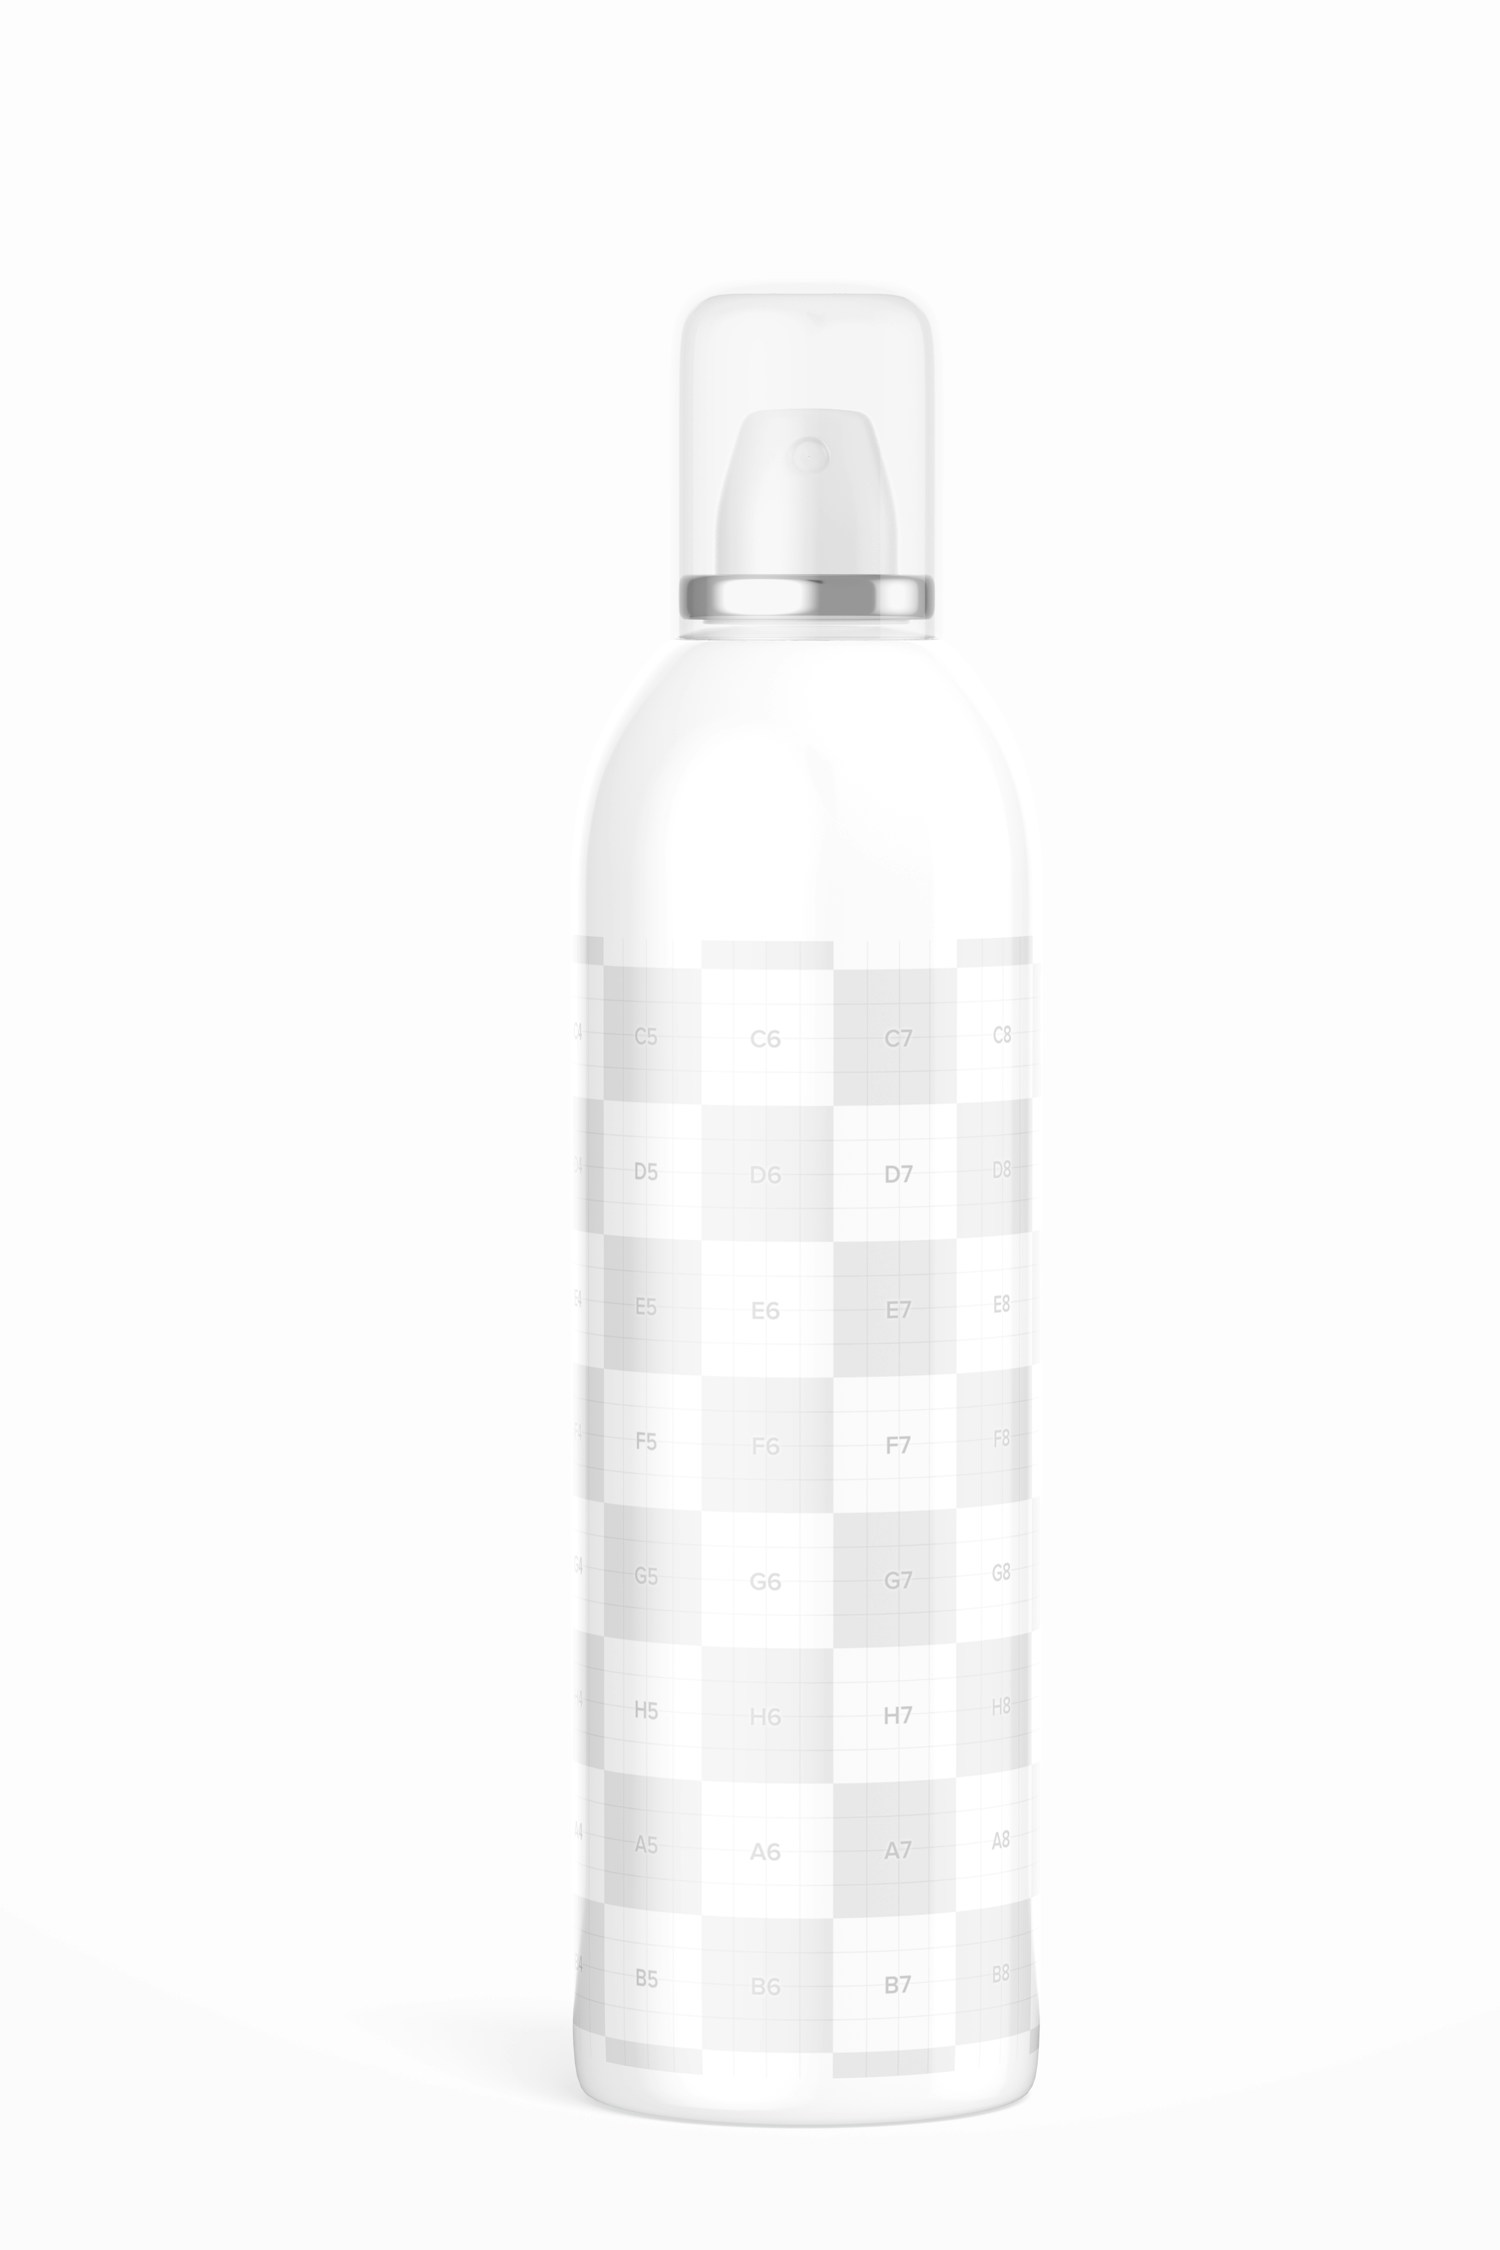 5.3 oz Spray Airbrush Bronzer Bottle Mockup